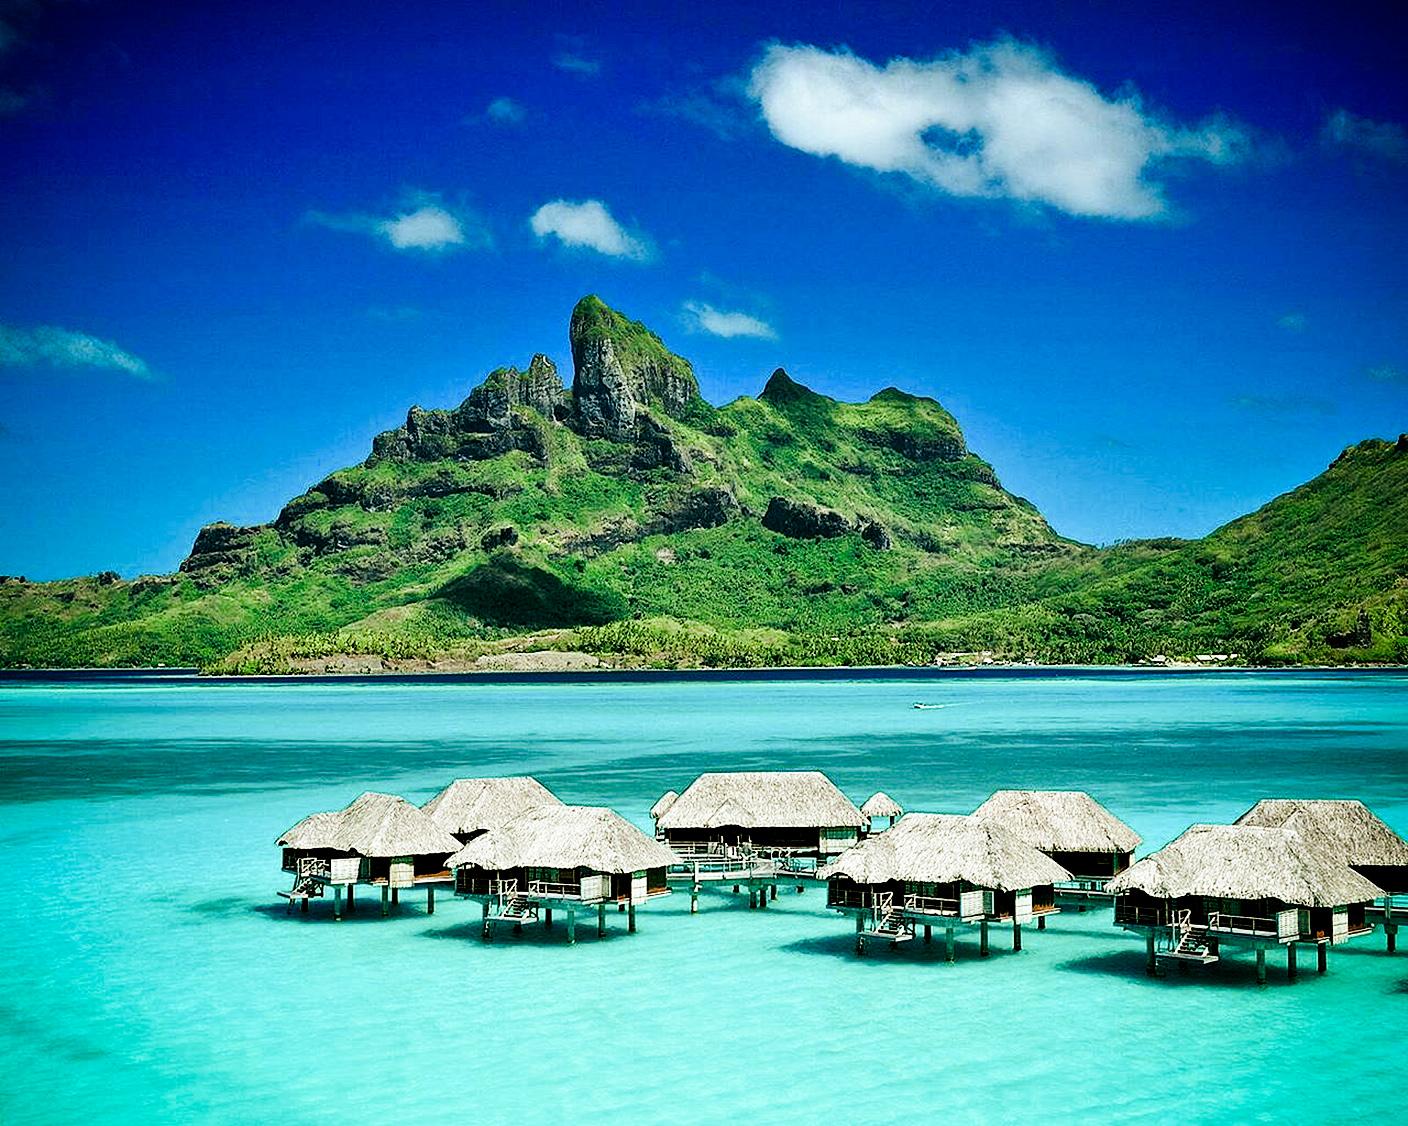 The Mauritius city, cover photo